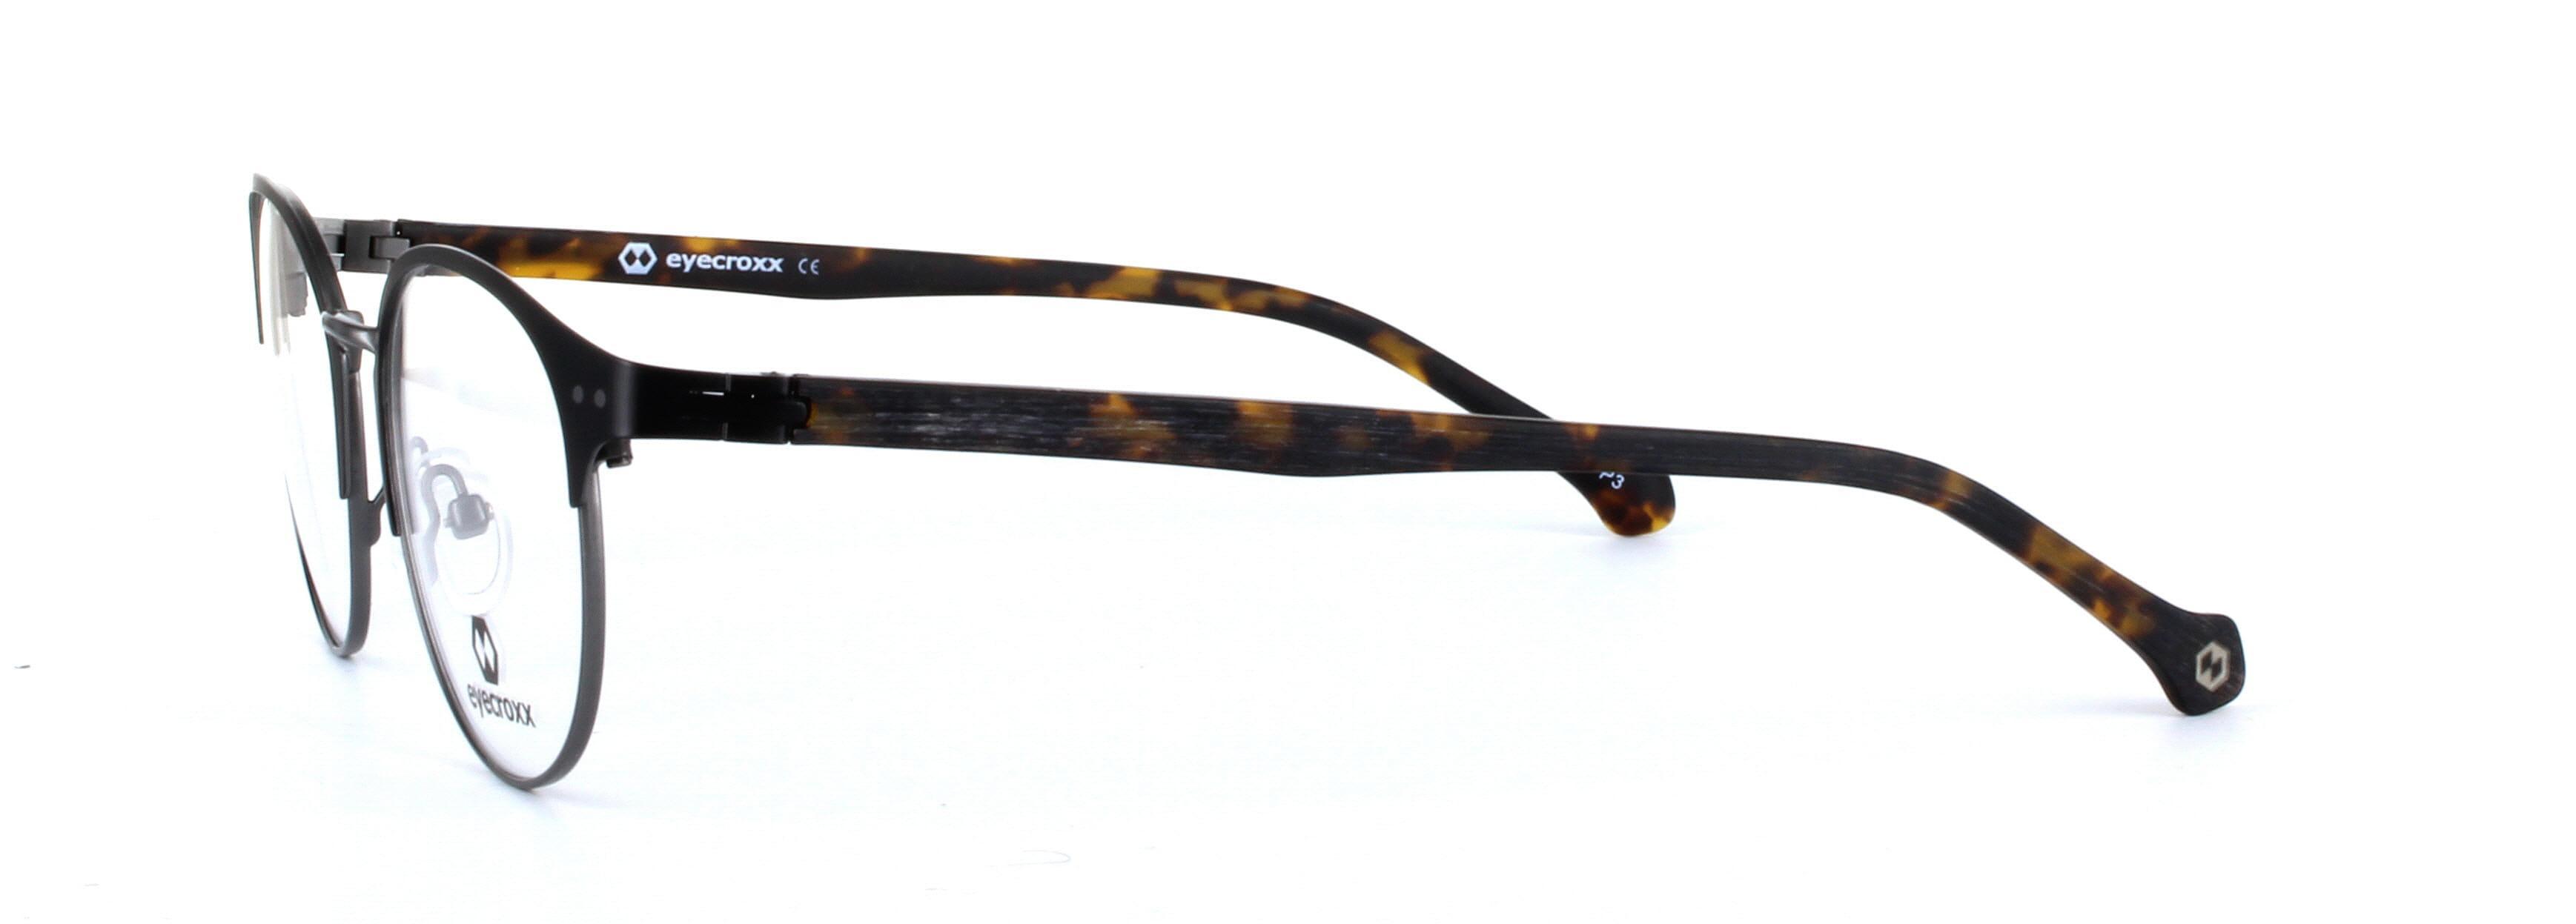 Eyecroxx 543-C4 Black Full Rim Round Metal Glasses - Image View 2